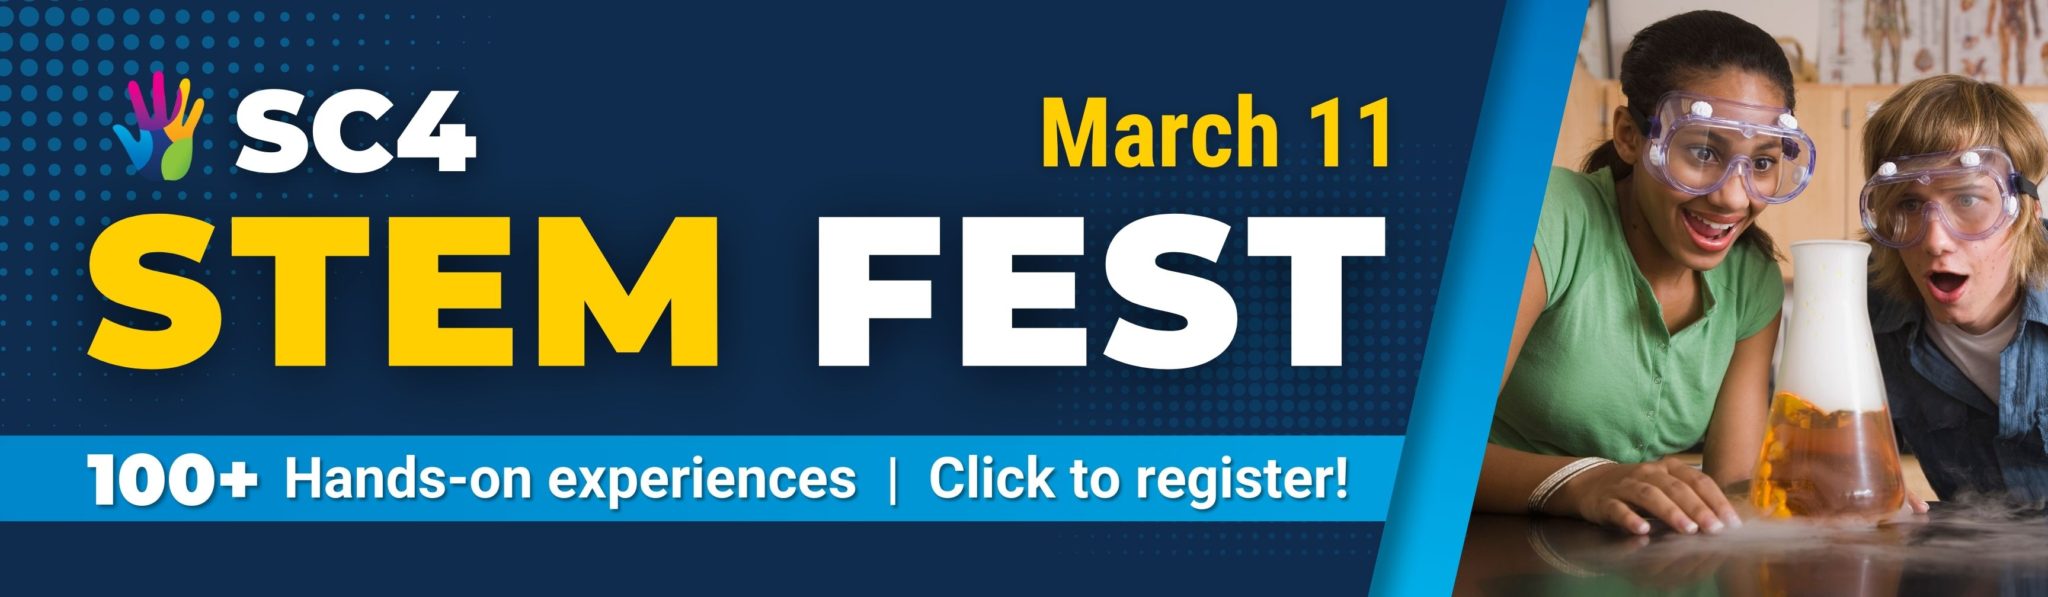 SC4 STEM Fest on March 11th Aerospace Industry Association of Michigan